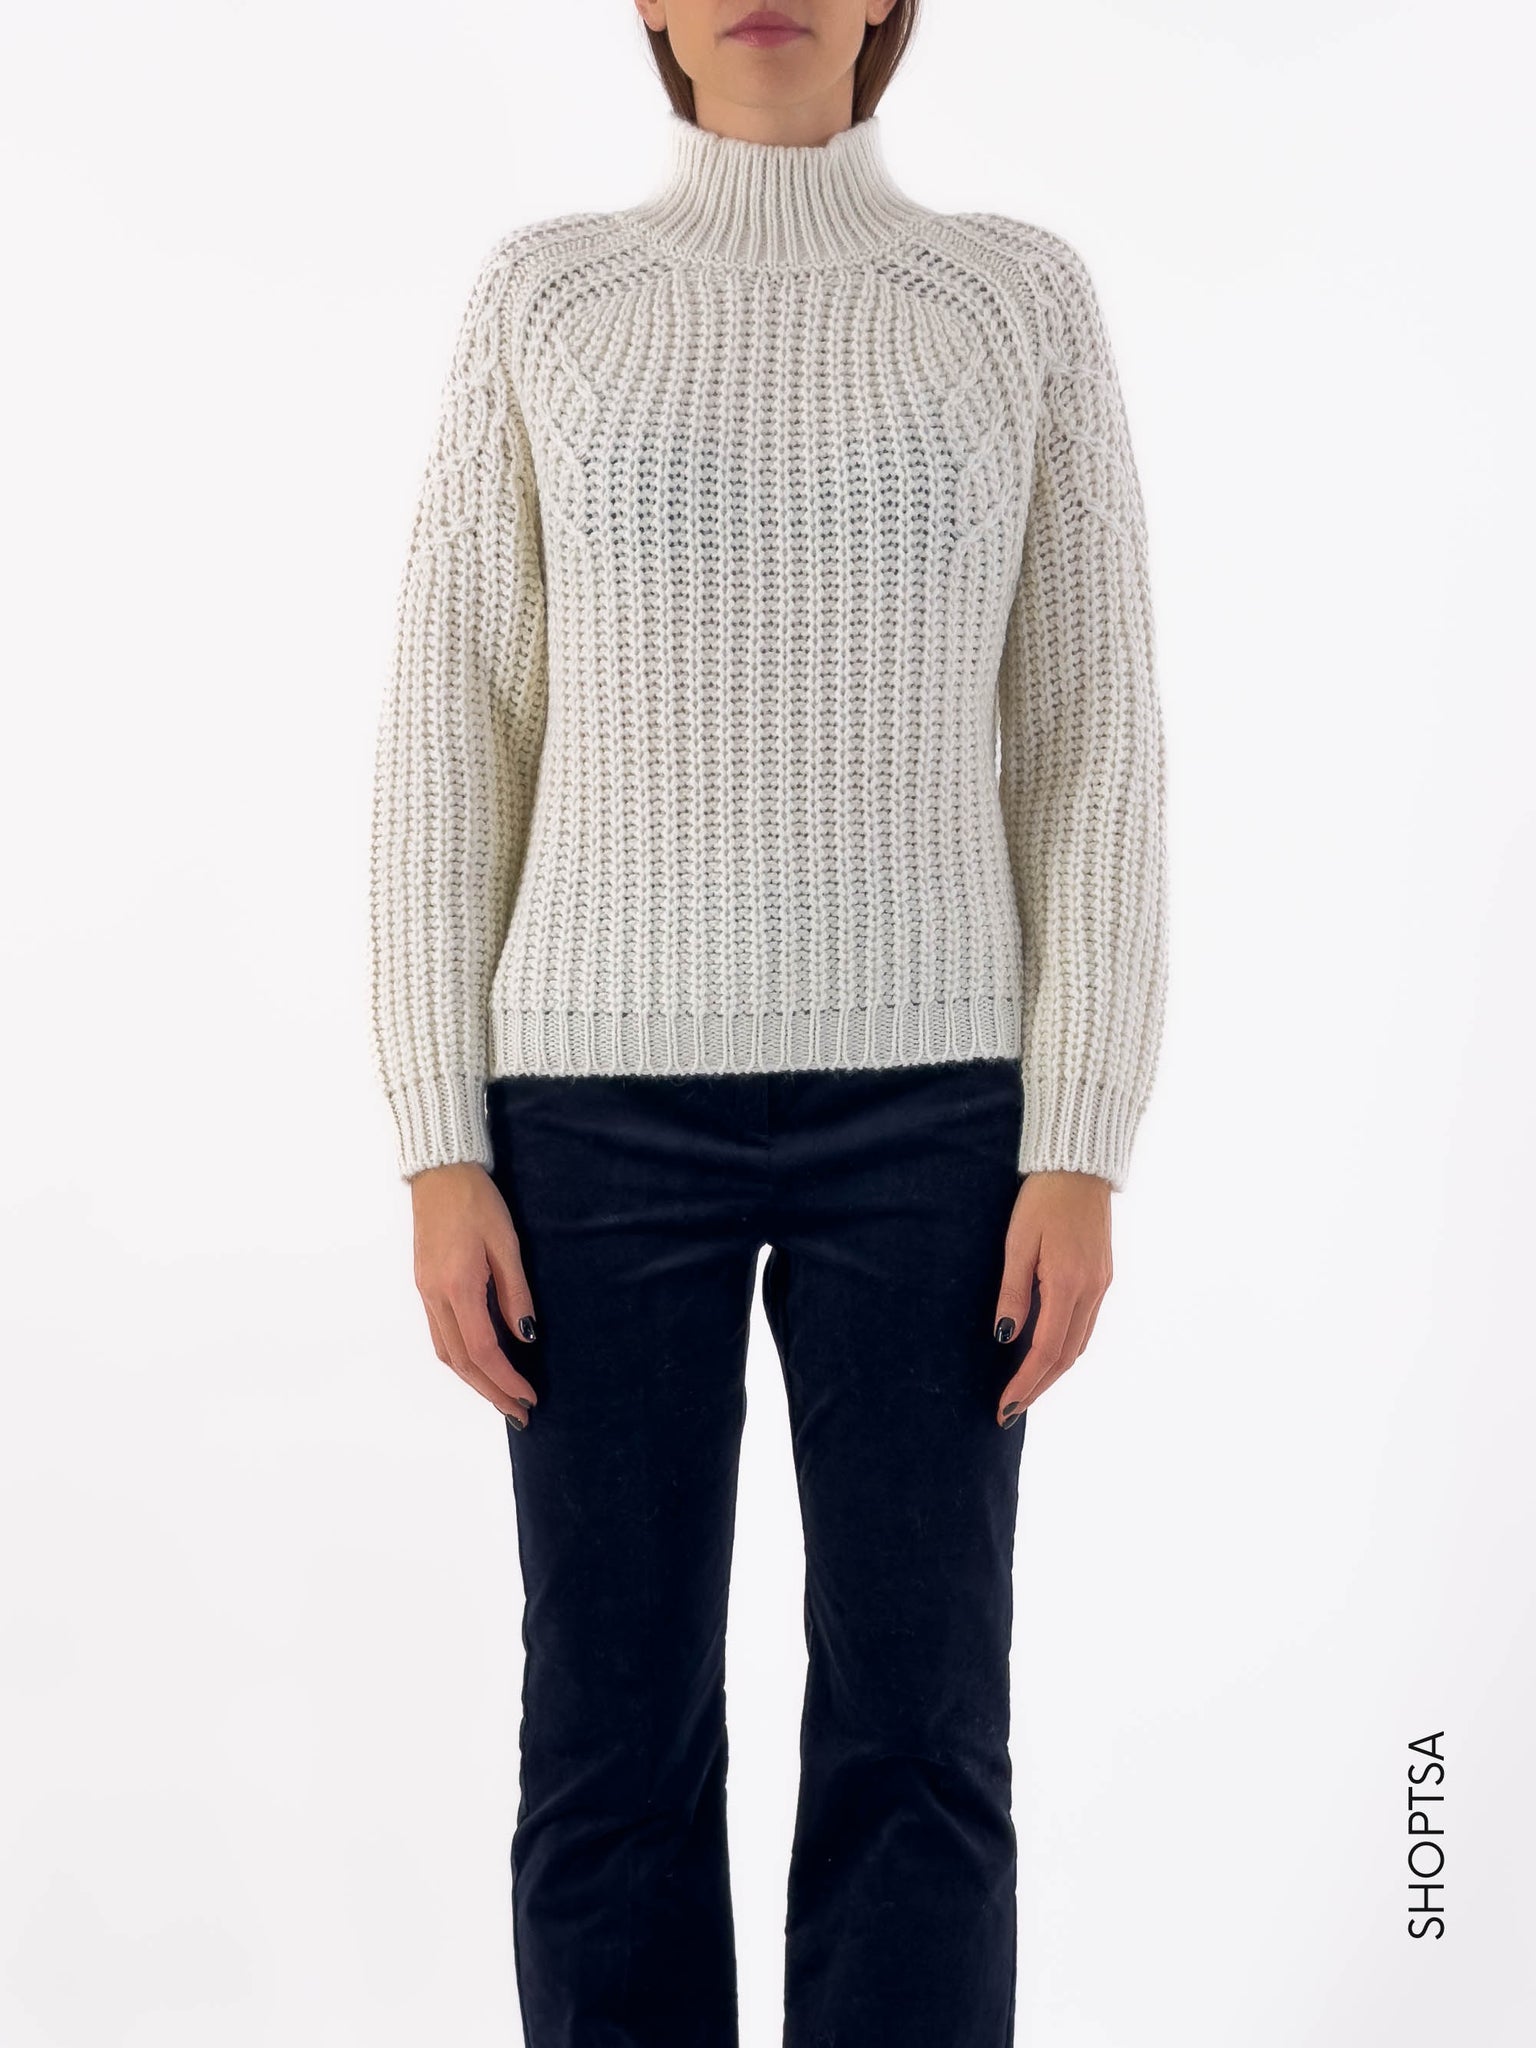 Premium comfy wool sweater